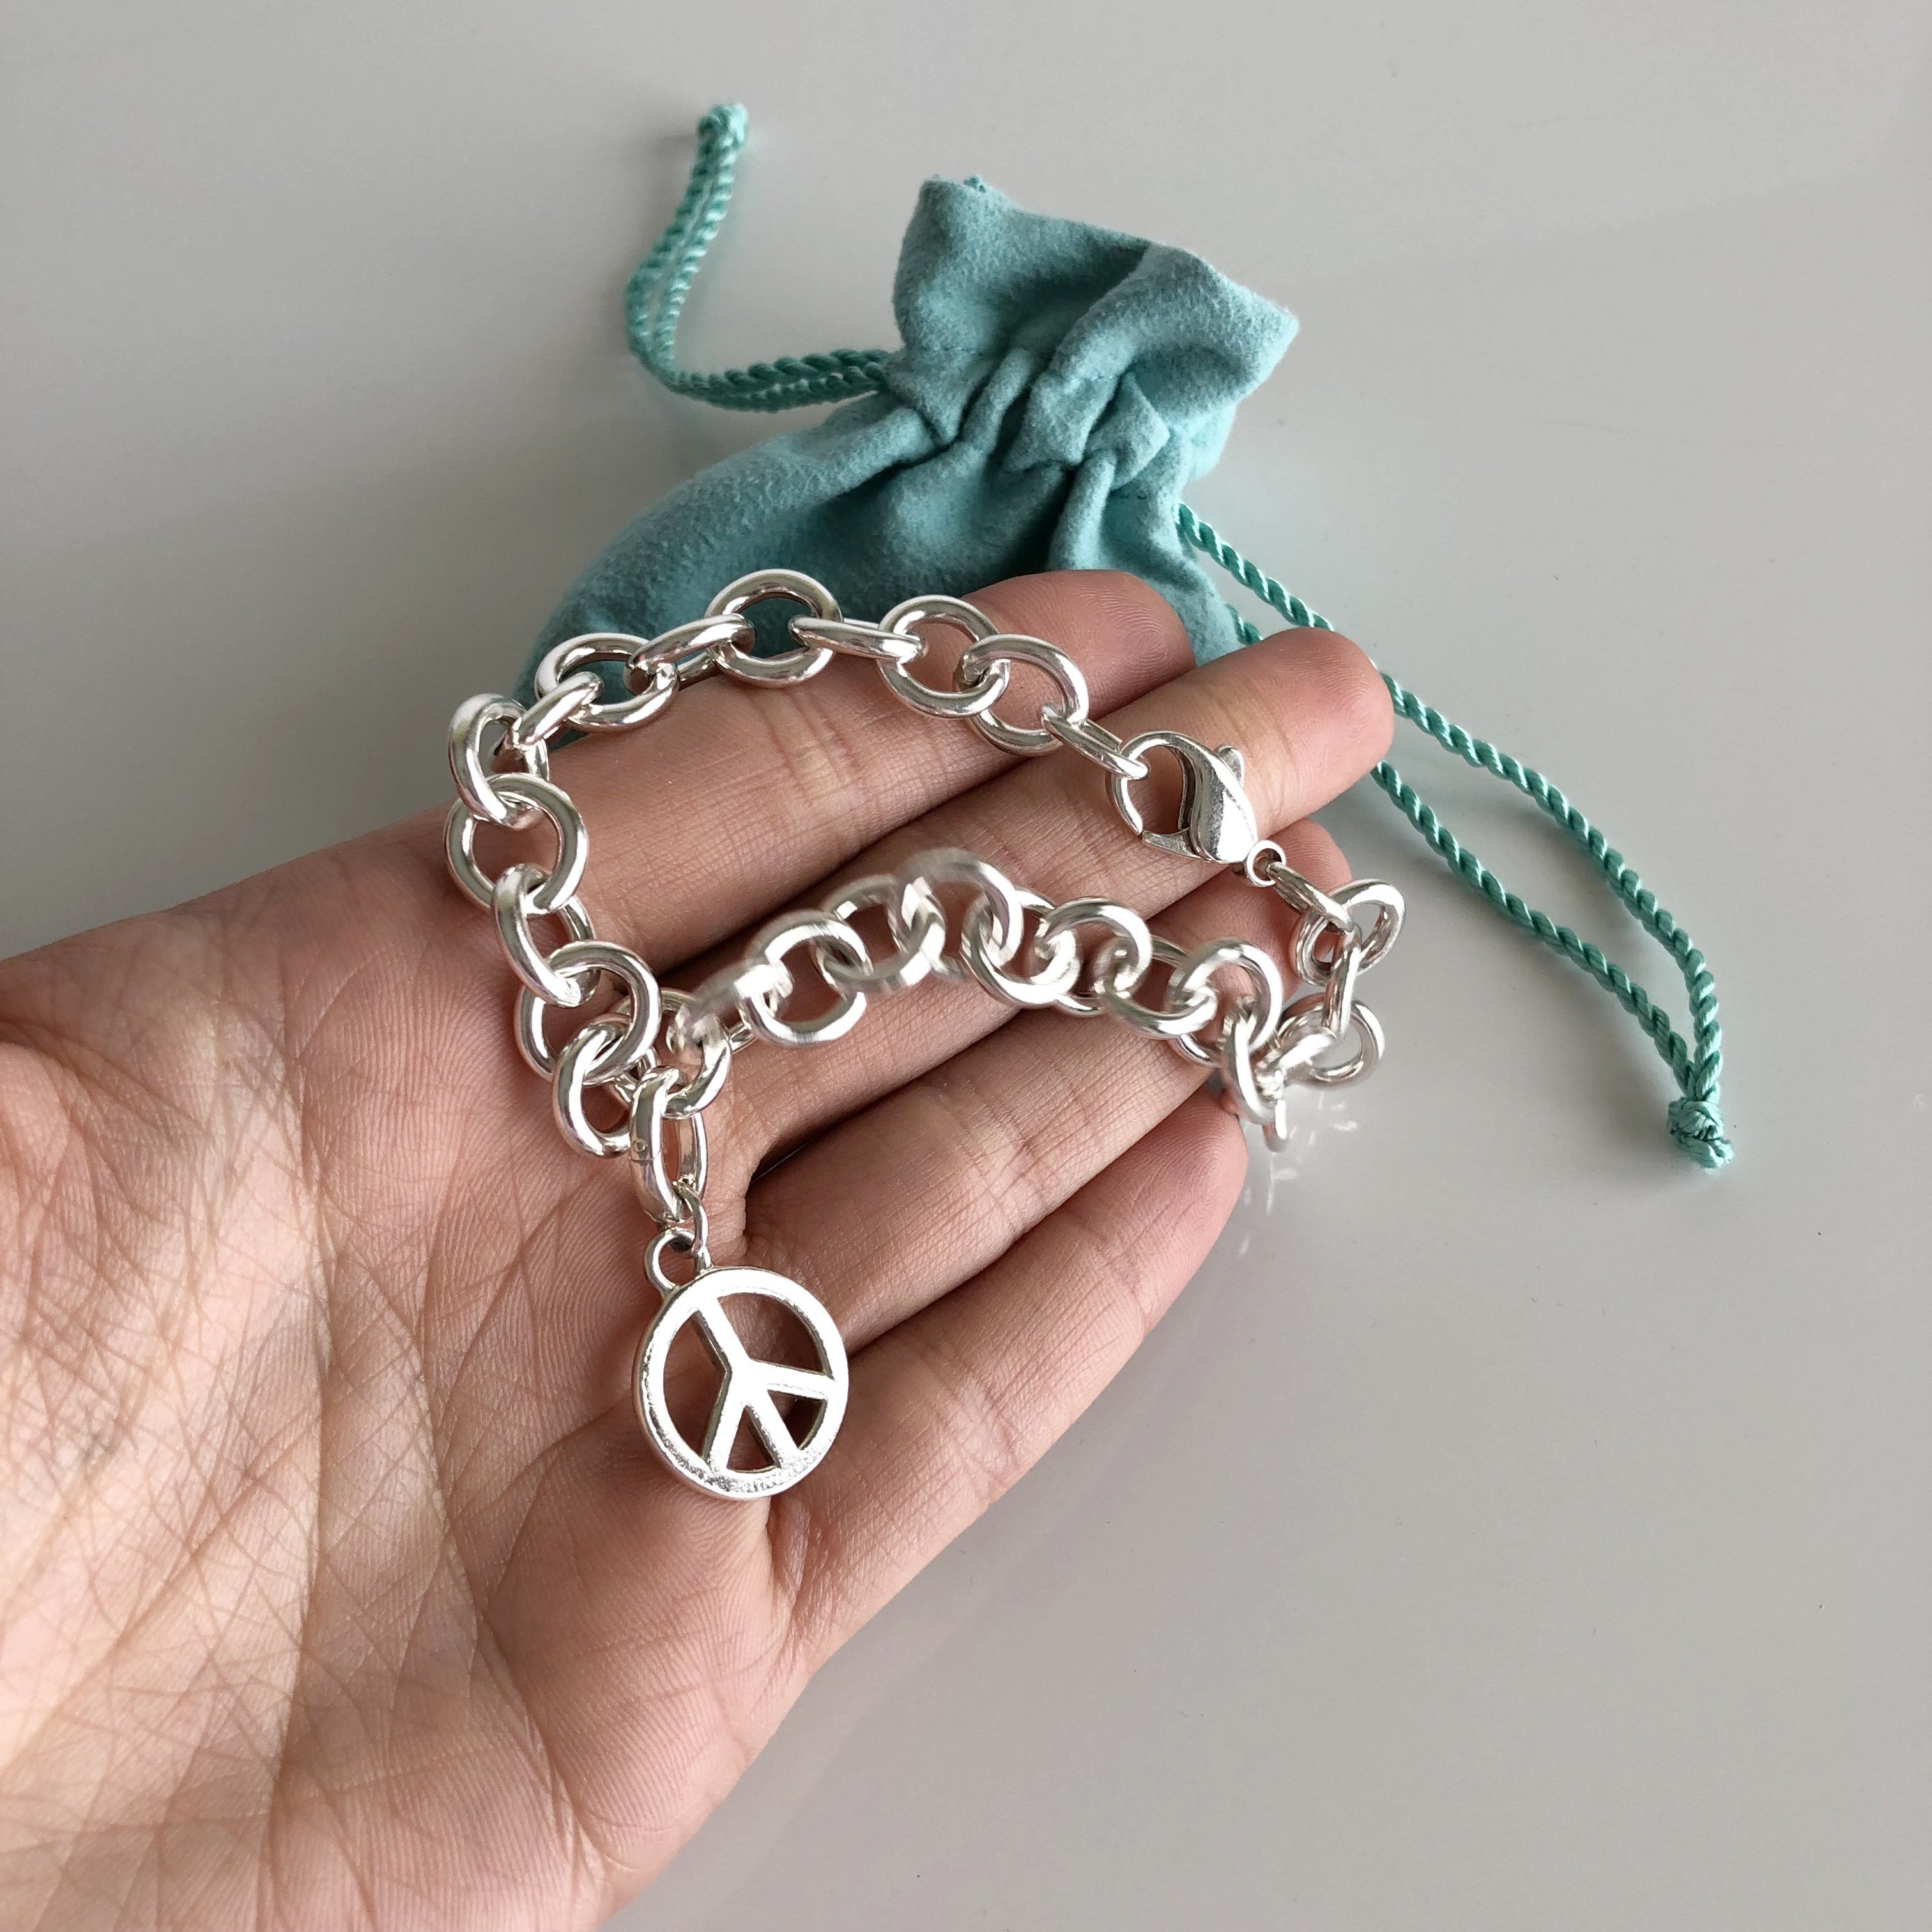 tiffany peace sign bracelet